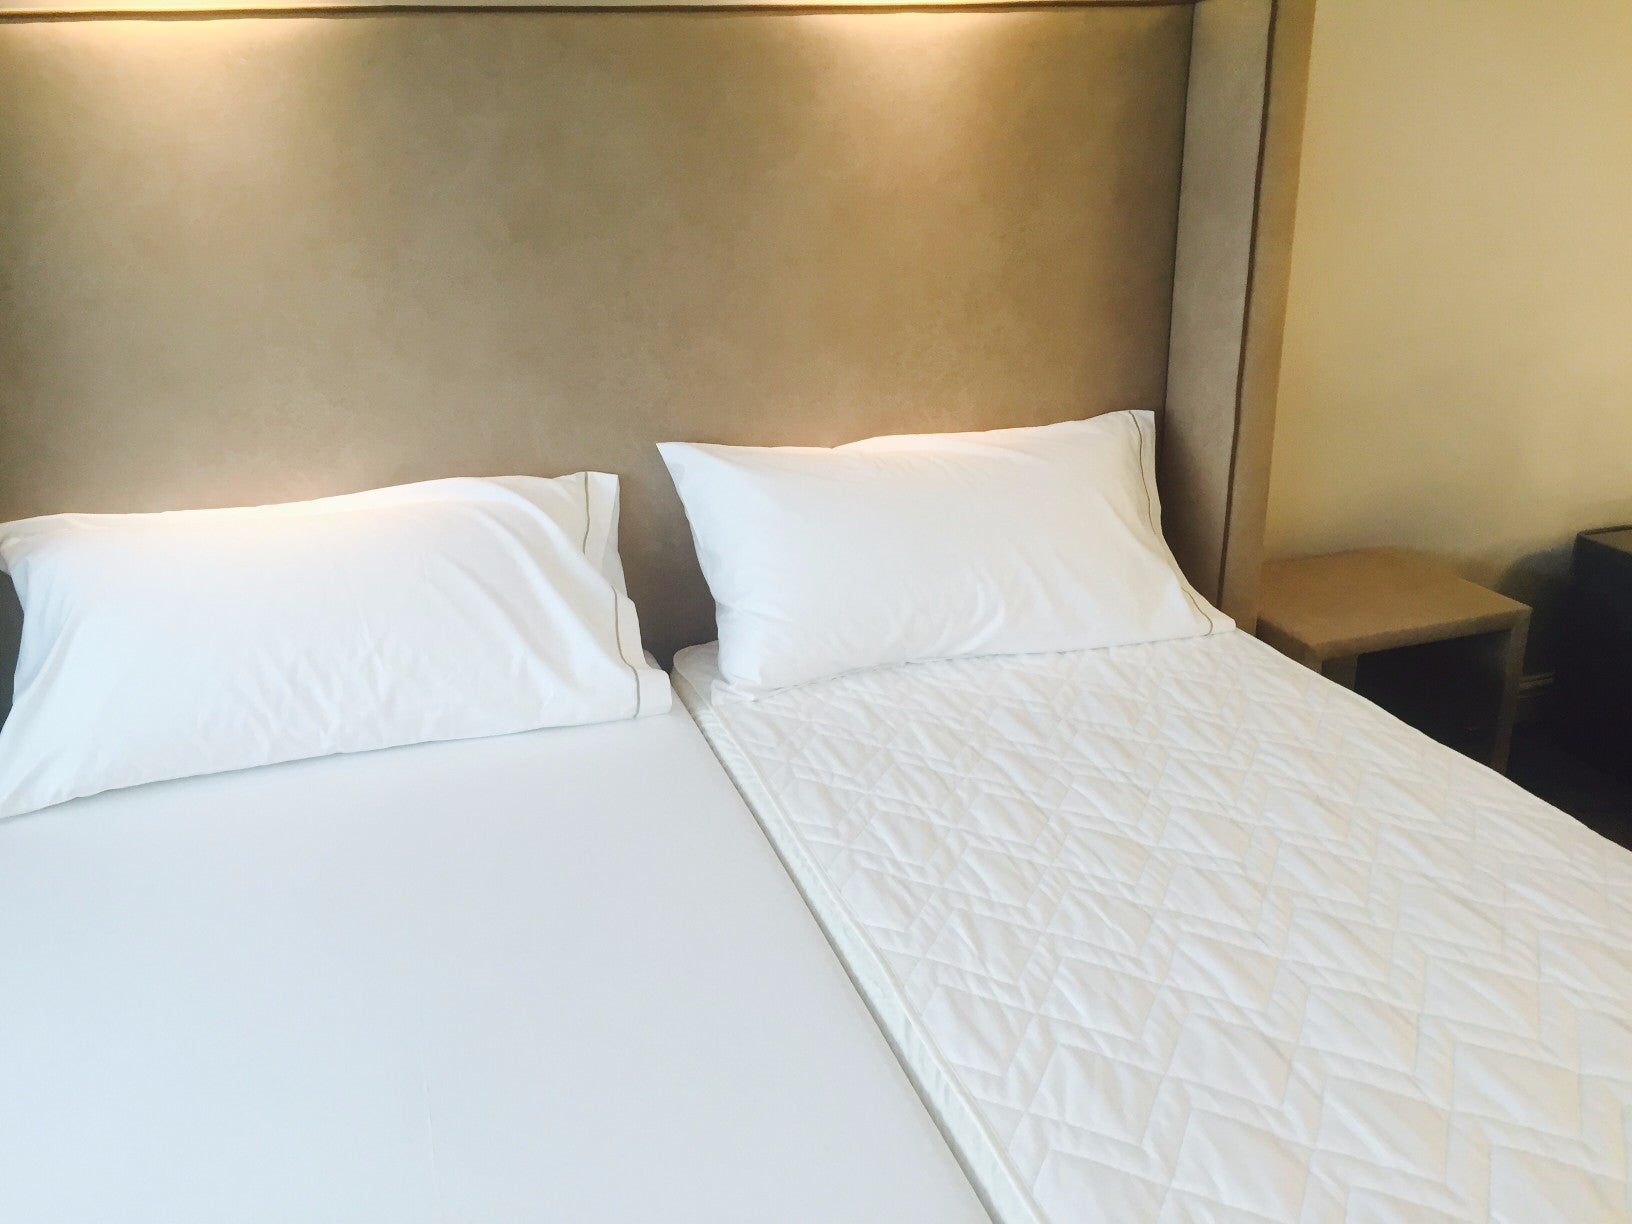 outlast mattress protector memory foam bed